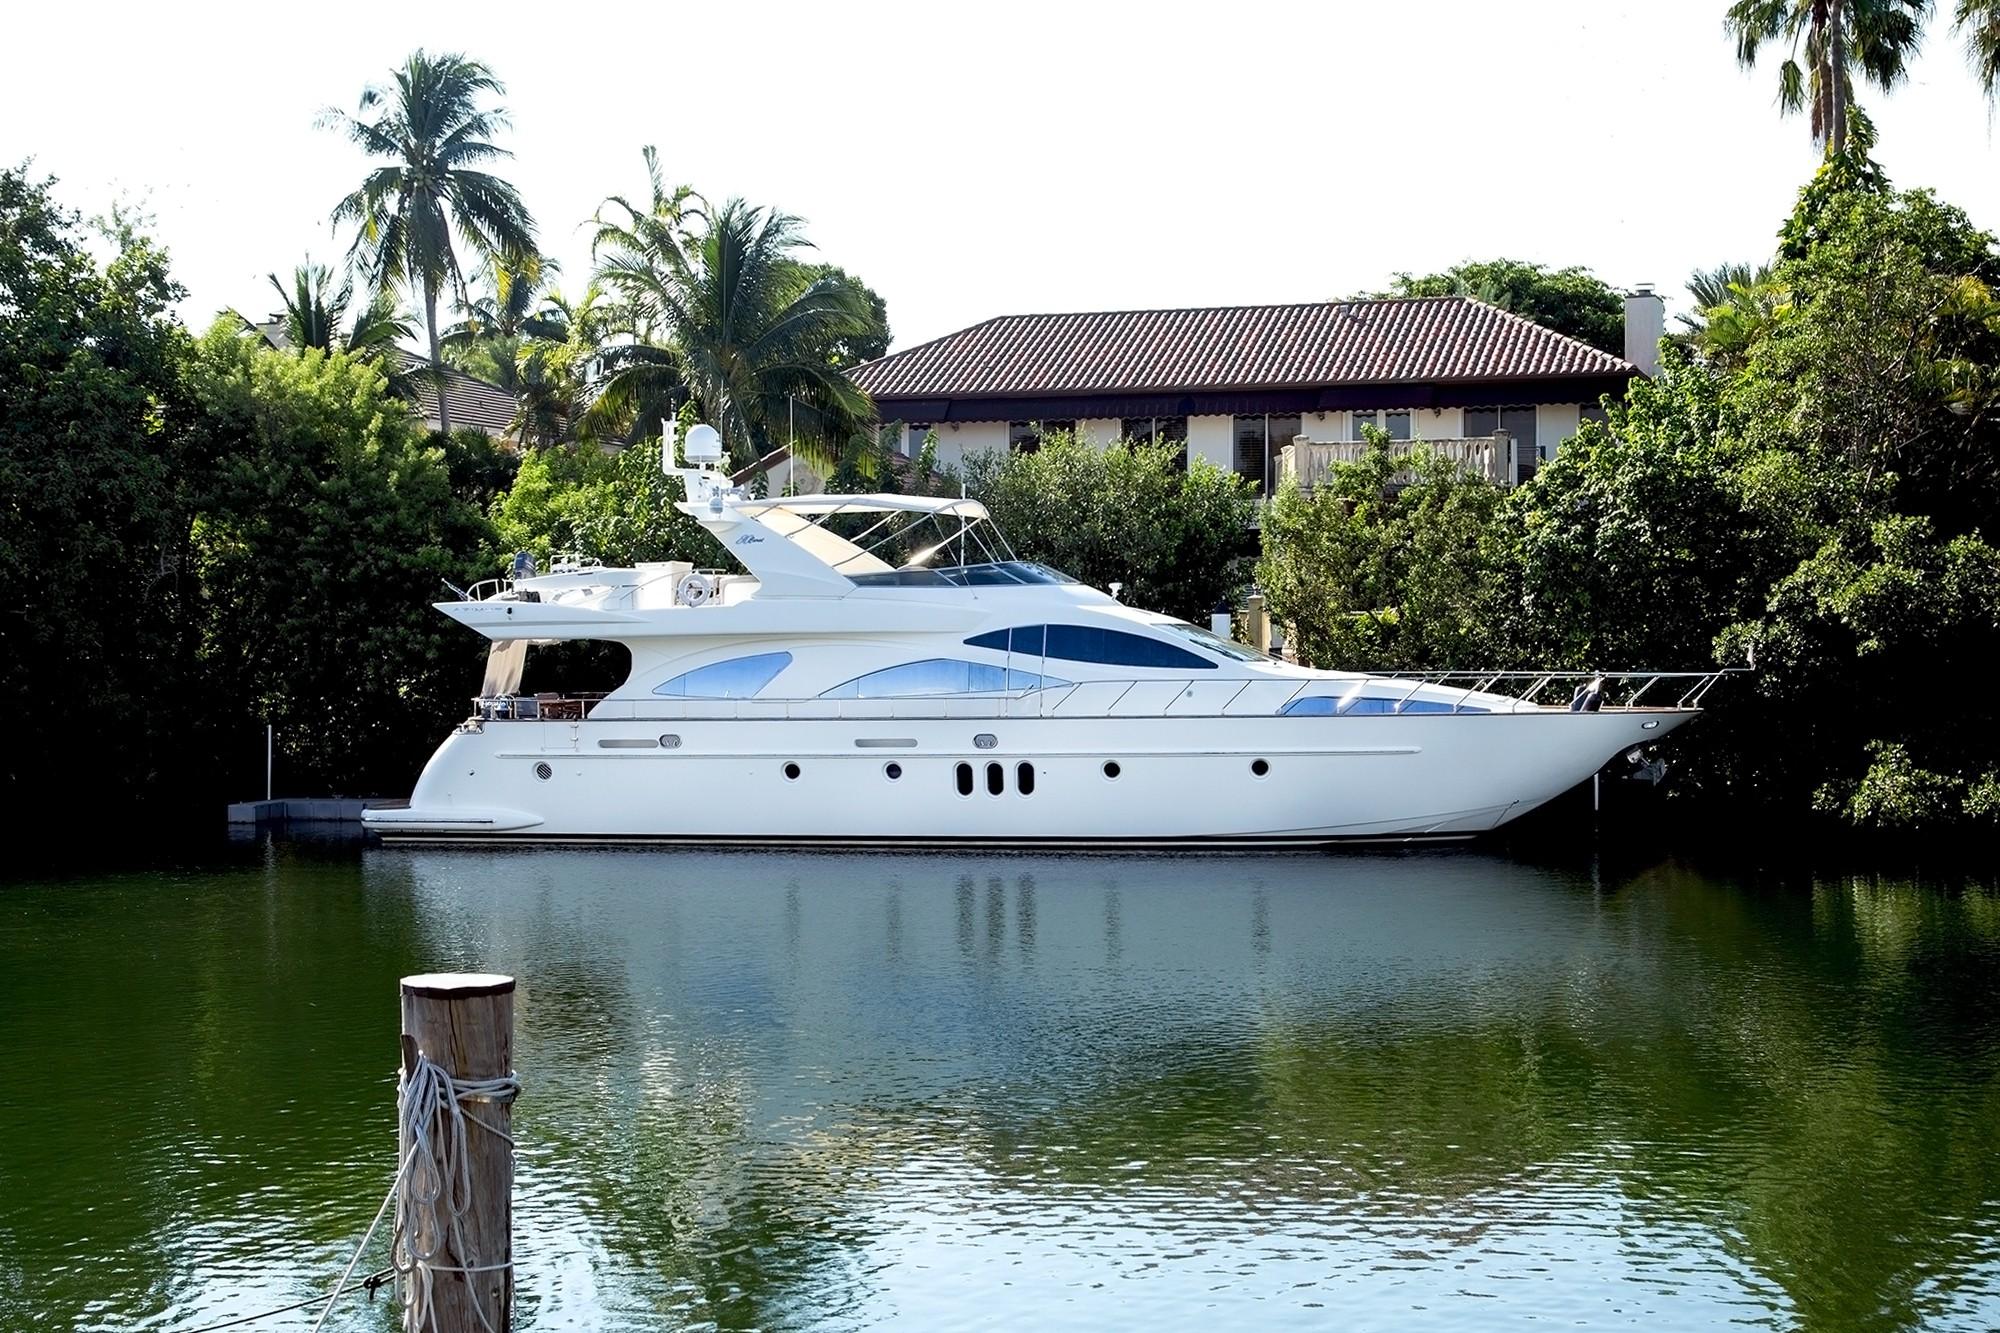 r&r yacht owner